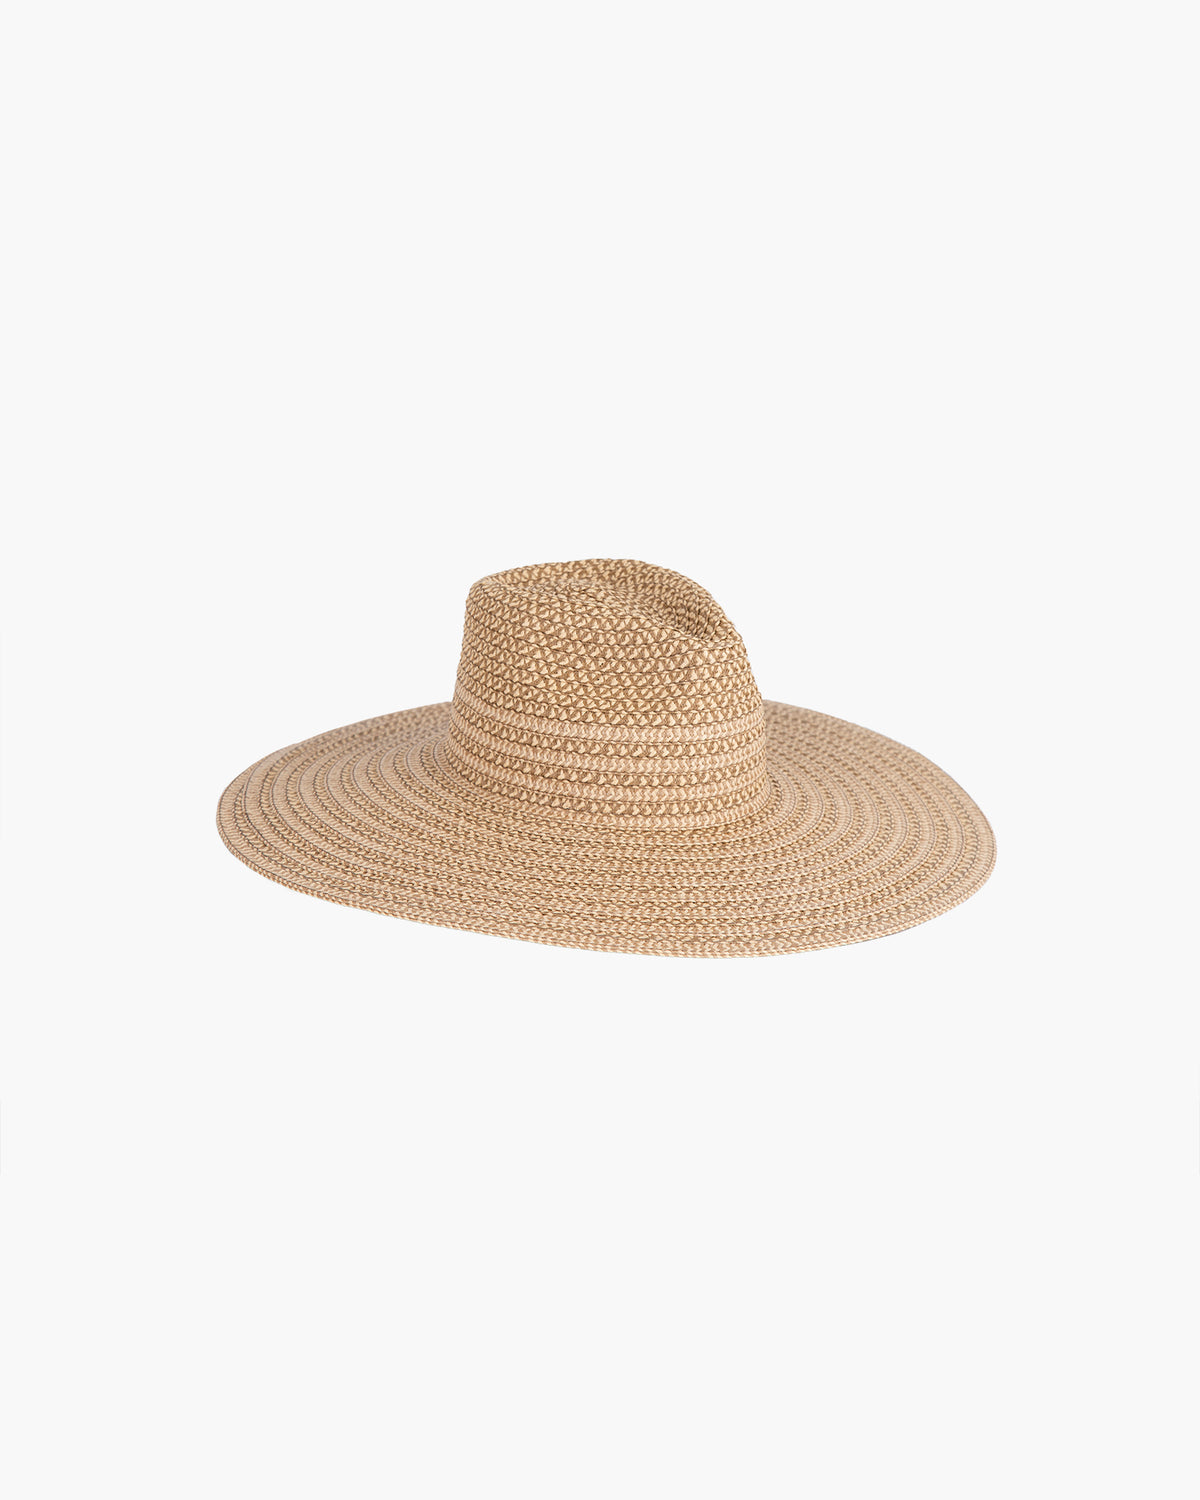 Sombra Sun Hat, Black Wide Brim Sun Hat Visor